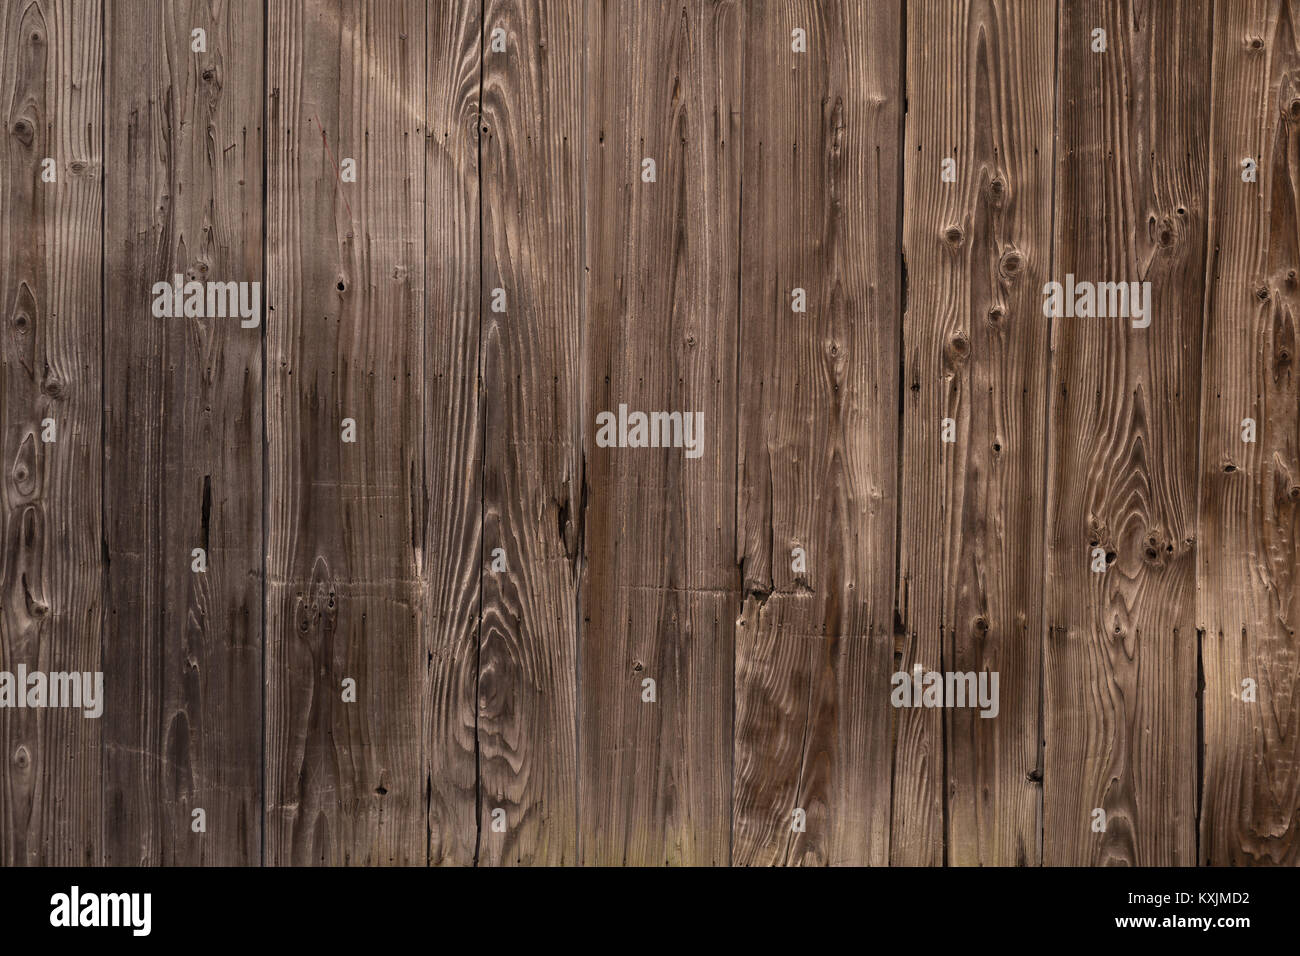 Japanese Pine Wood texture background. Stock Photo